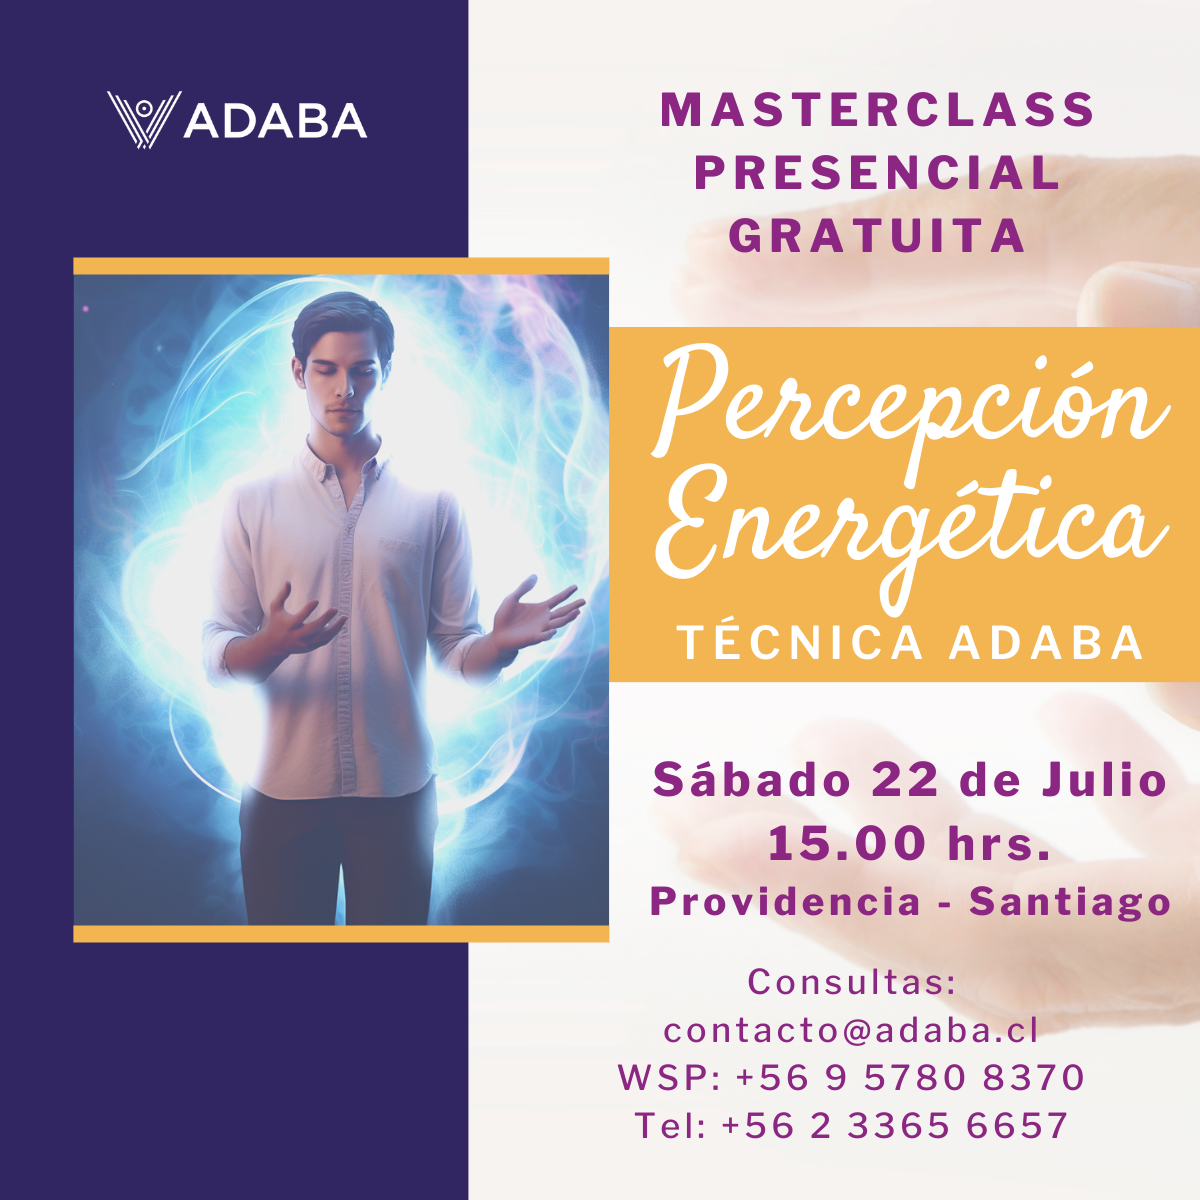 Masterclass Presencial Gratuita - Percepción Energética Técnica ADABA ✨- 22 Julio